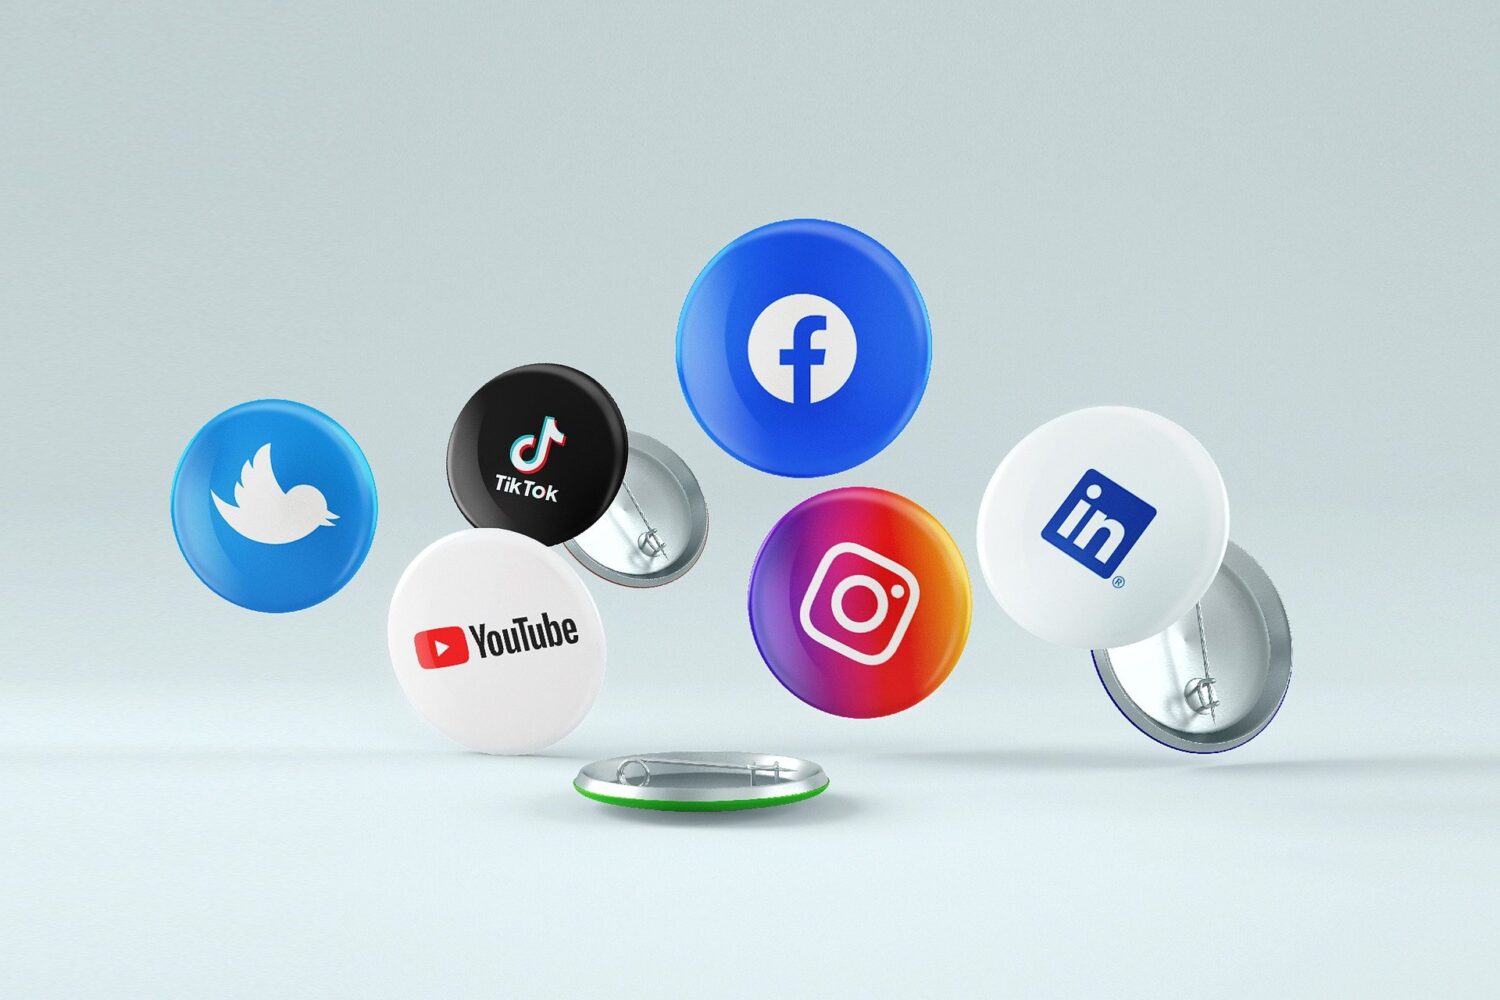 Social media icons bouncing around (includes Twitter, Facebook, YouTube, Instagram, TikTok, LinkedIn)